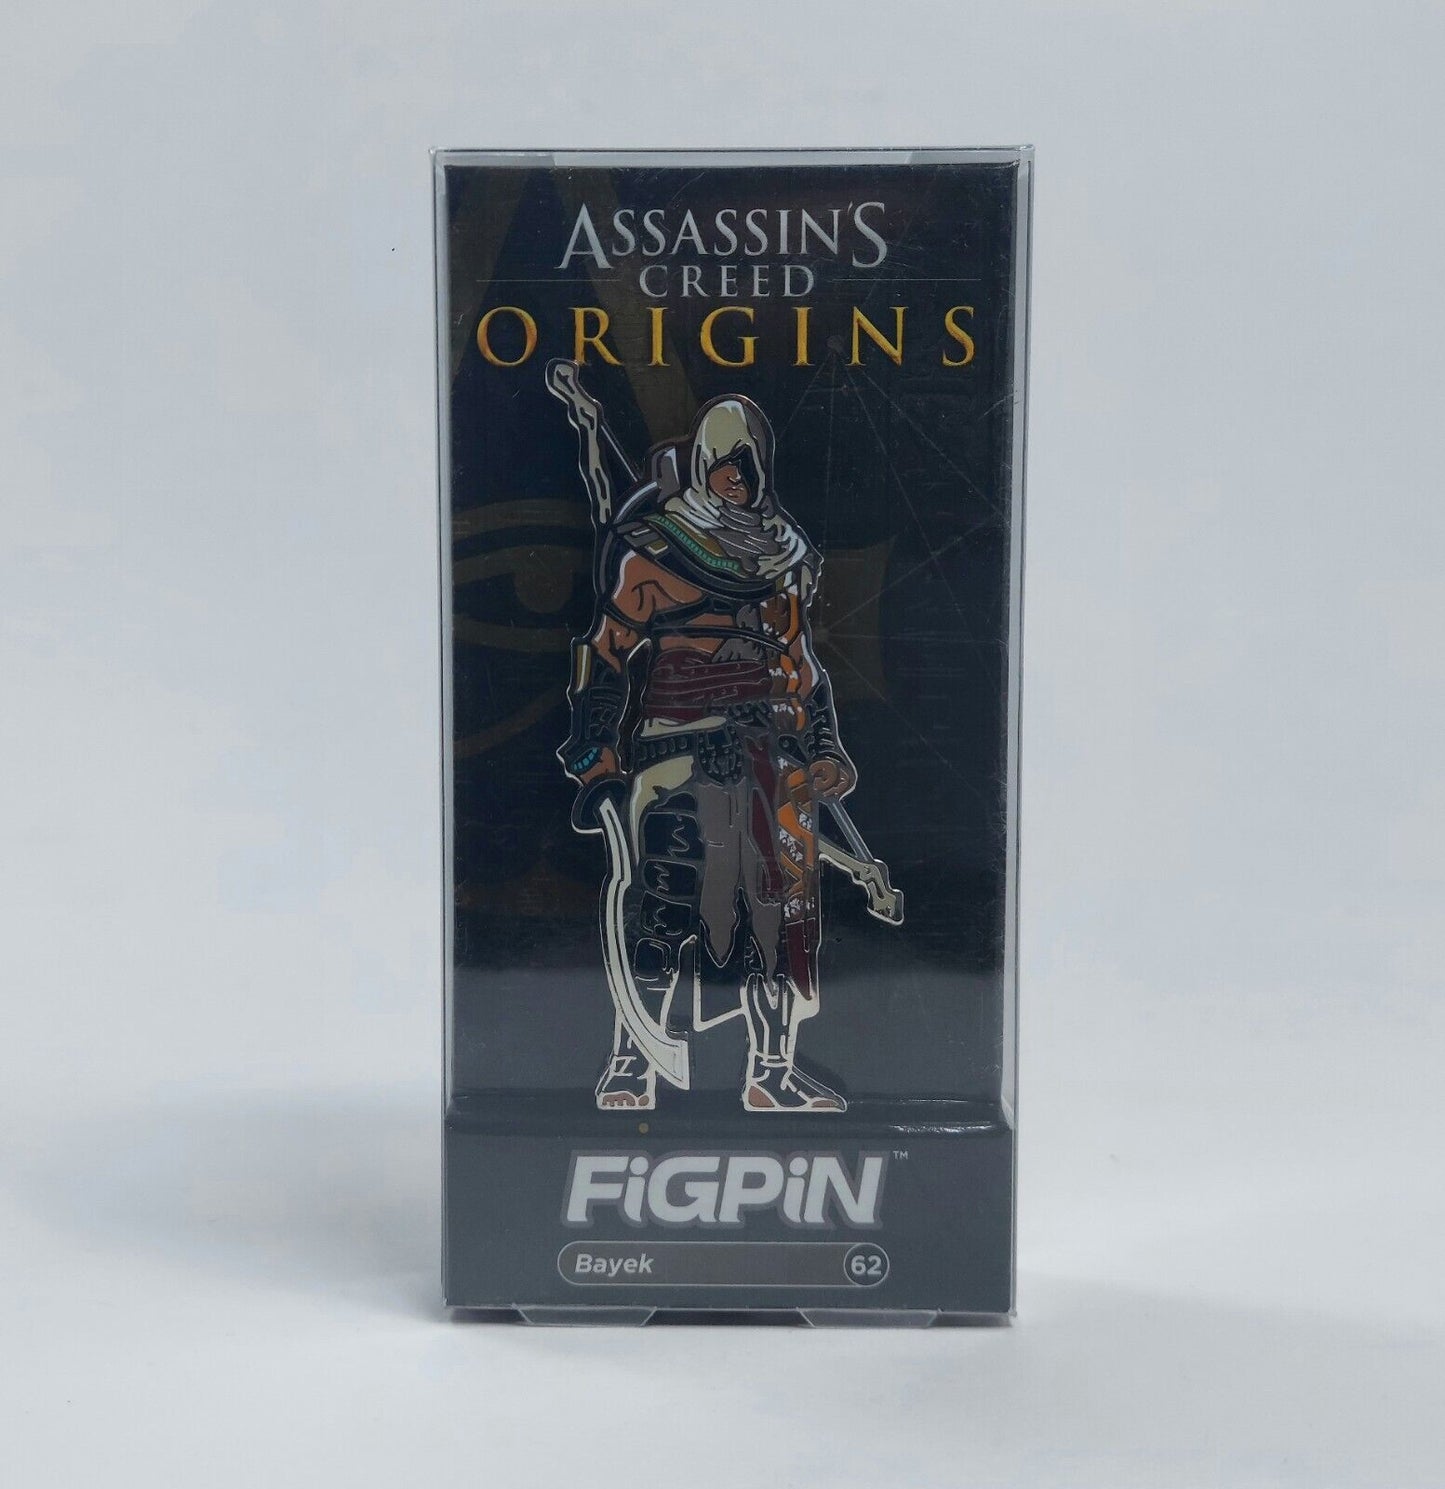 Assassin's Creed Origin's FiGPiN Bayek #62